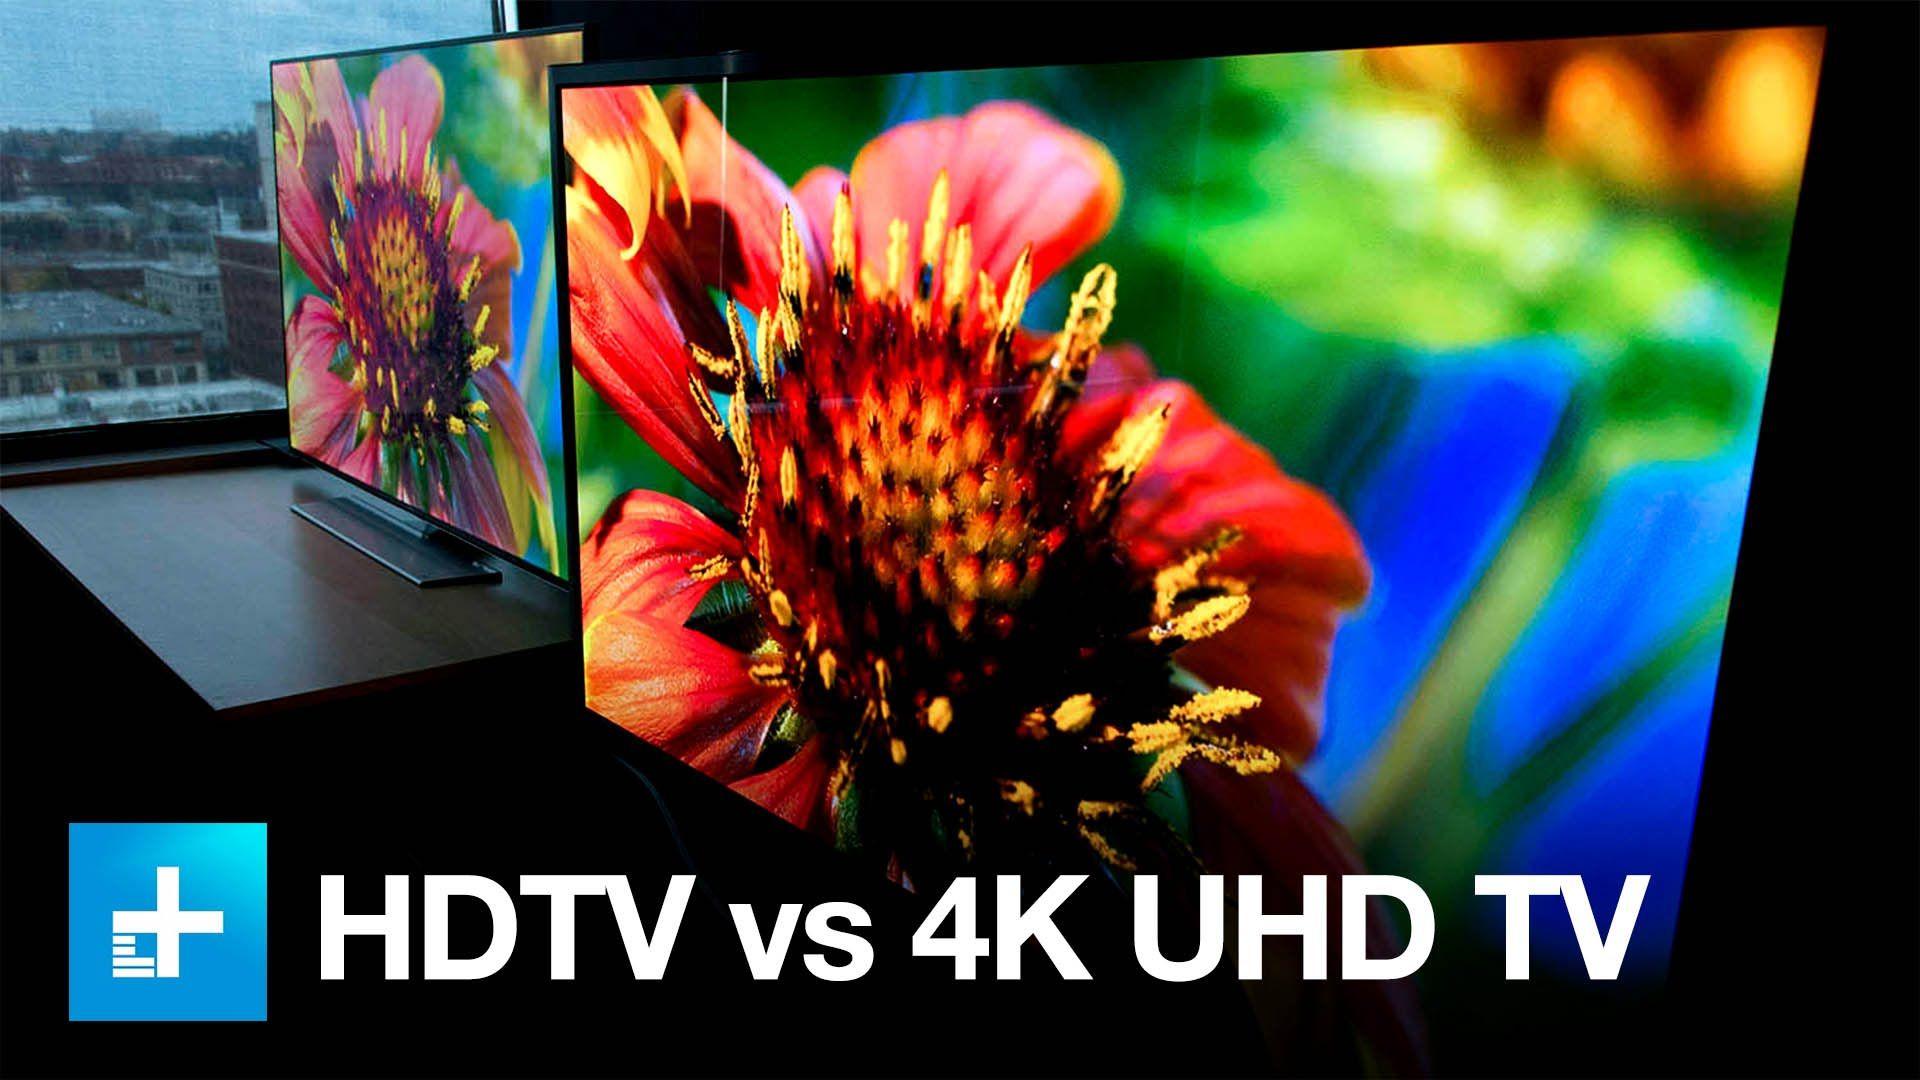 4K UHD TV vs. 1080p HDTV